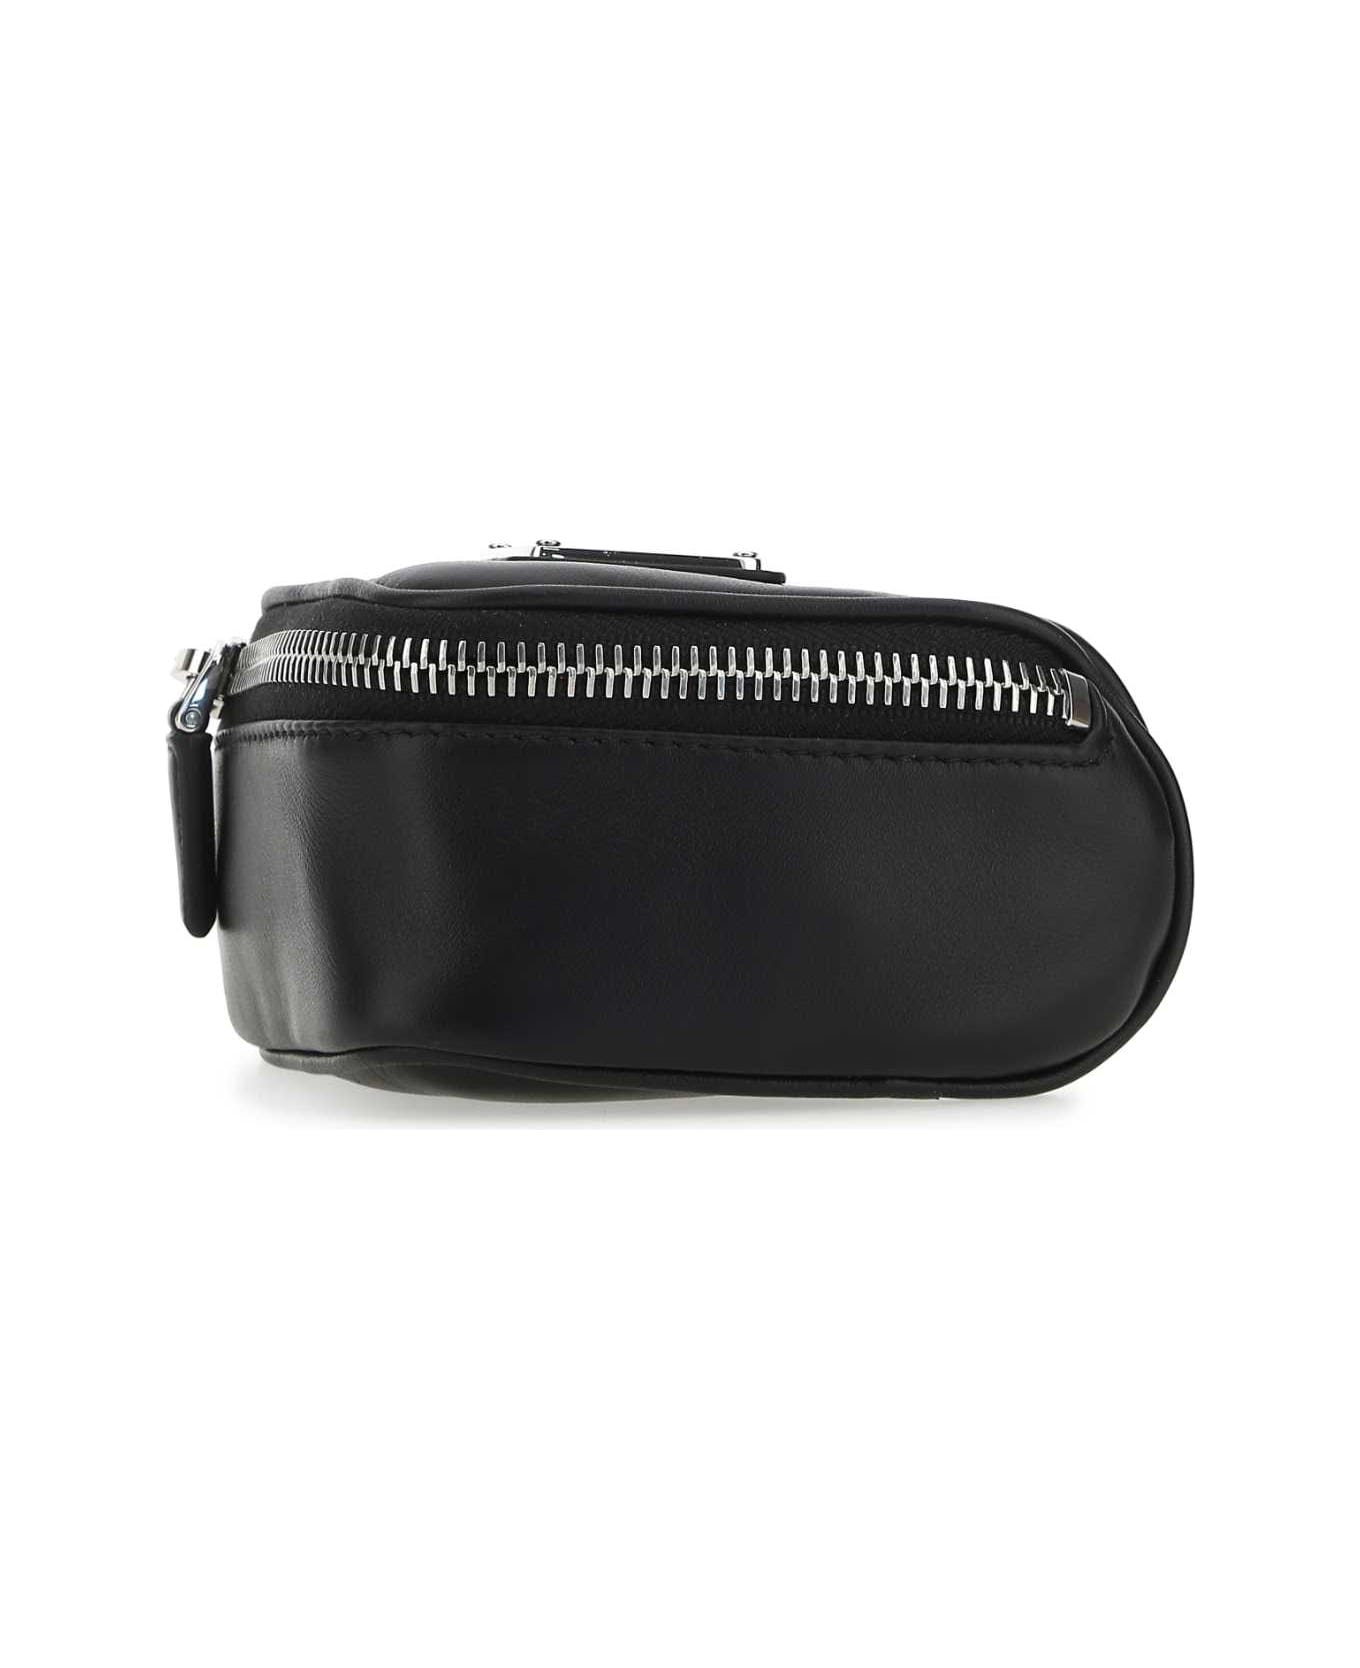 Prada Black Leather Case - F0002 トラベルバッグ